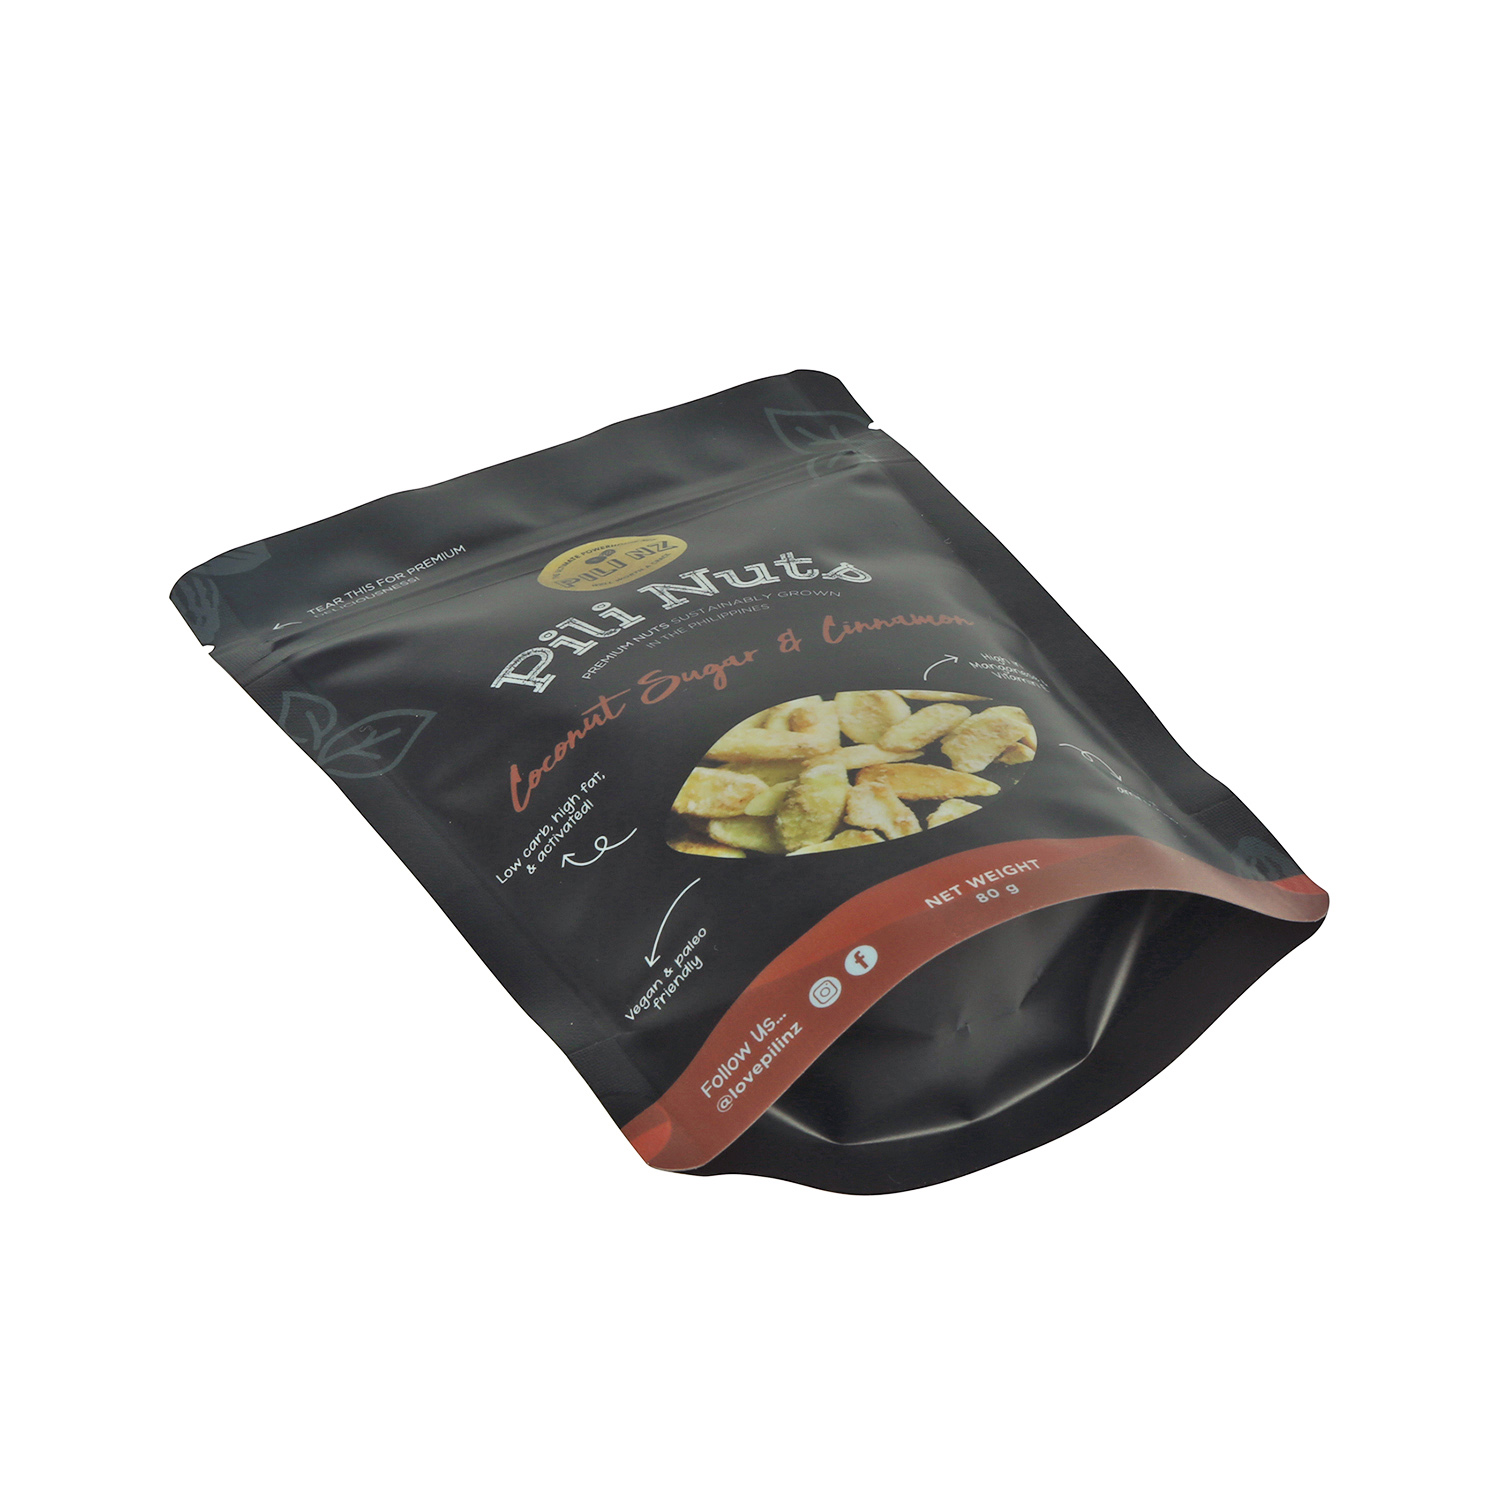 Heat Sealable Organic Cashew Nut Bags with Zip Lock